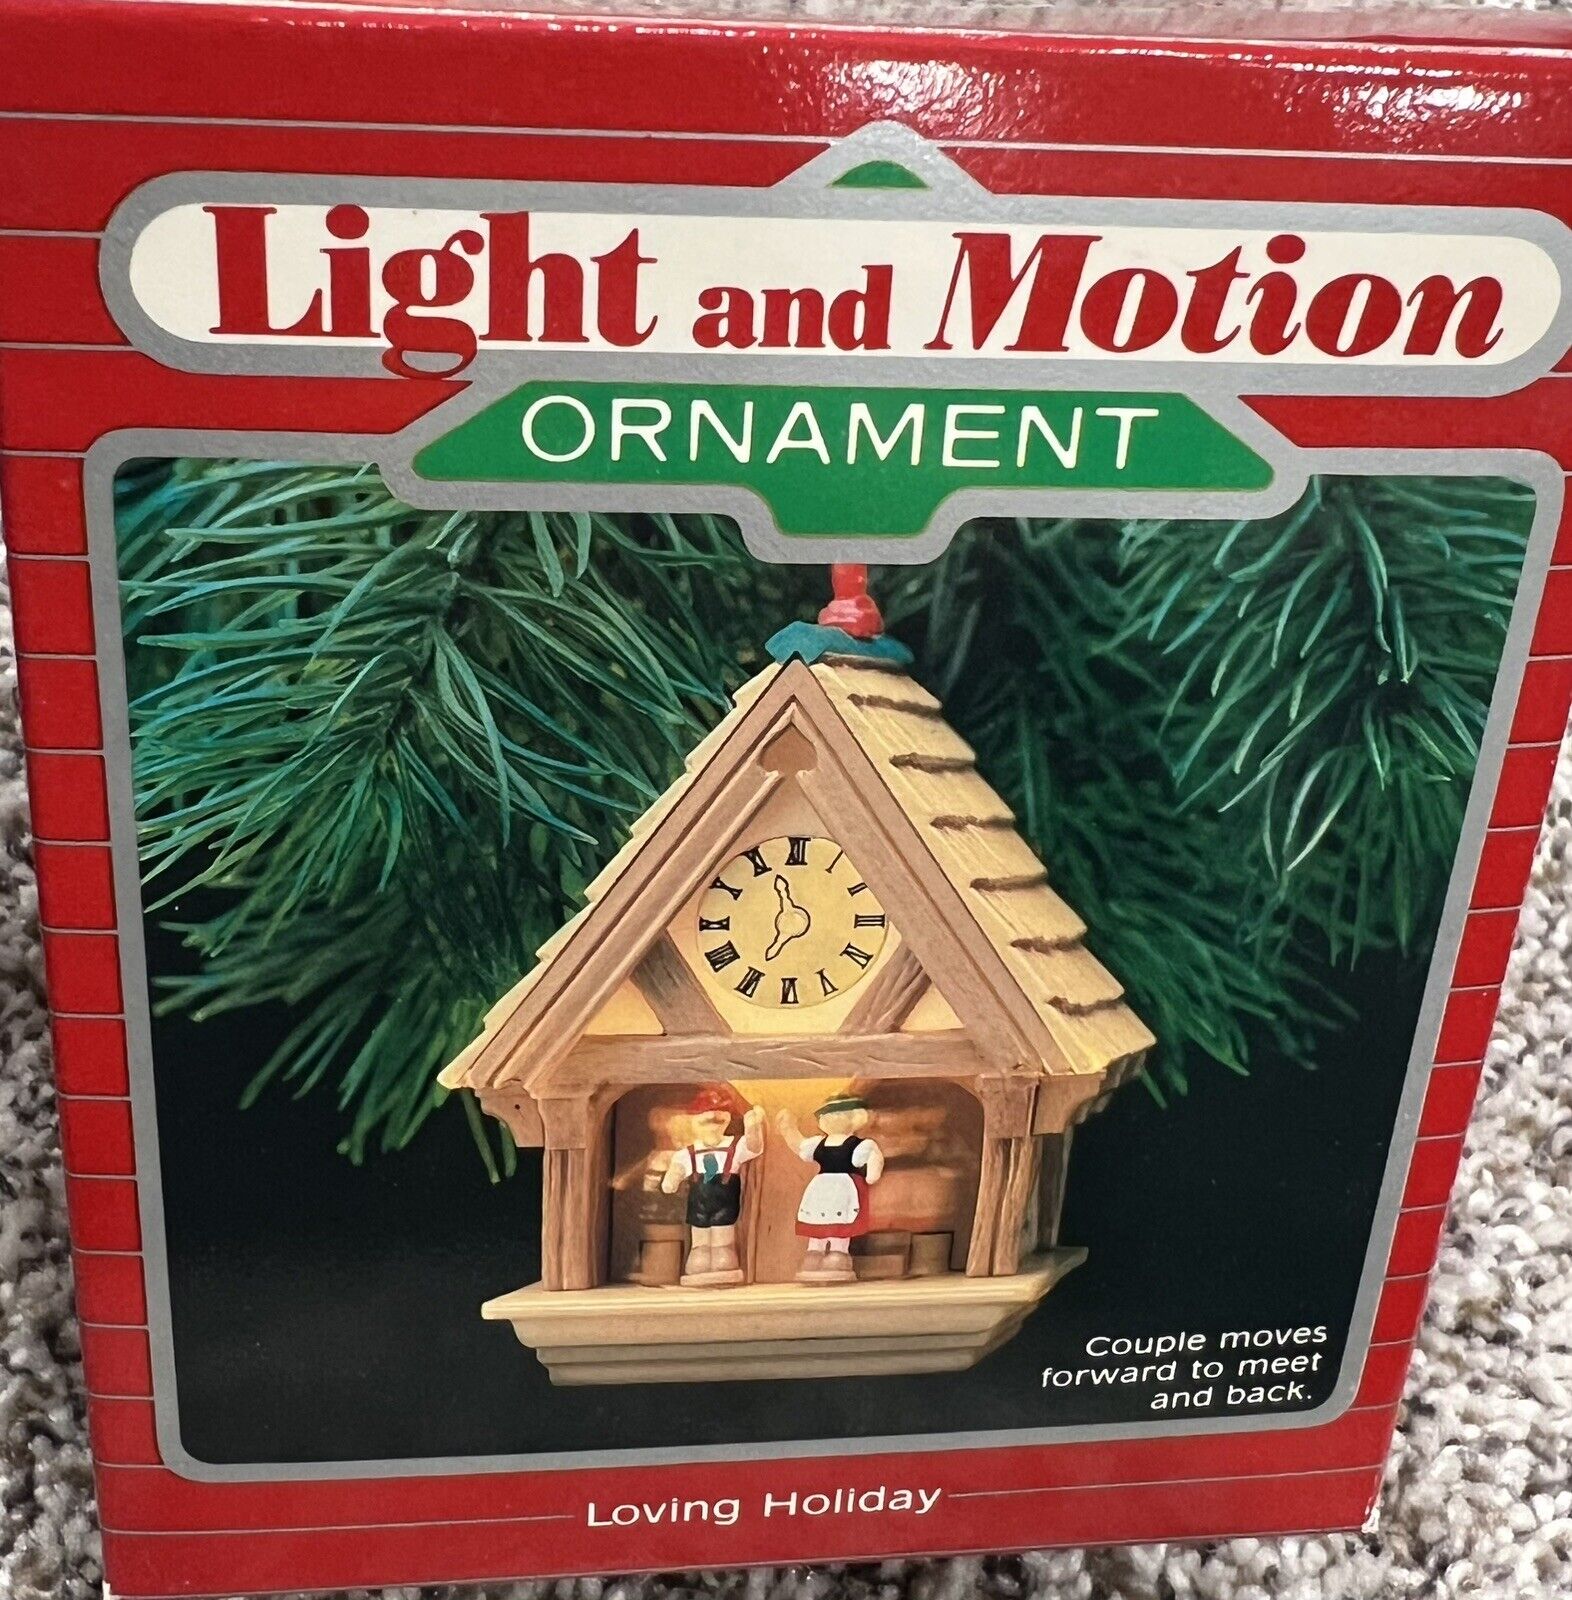 1987 Hallmark Christmas Ornament  LOVING HOLIDAY Magic Light and Motion